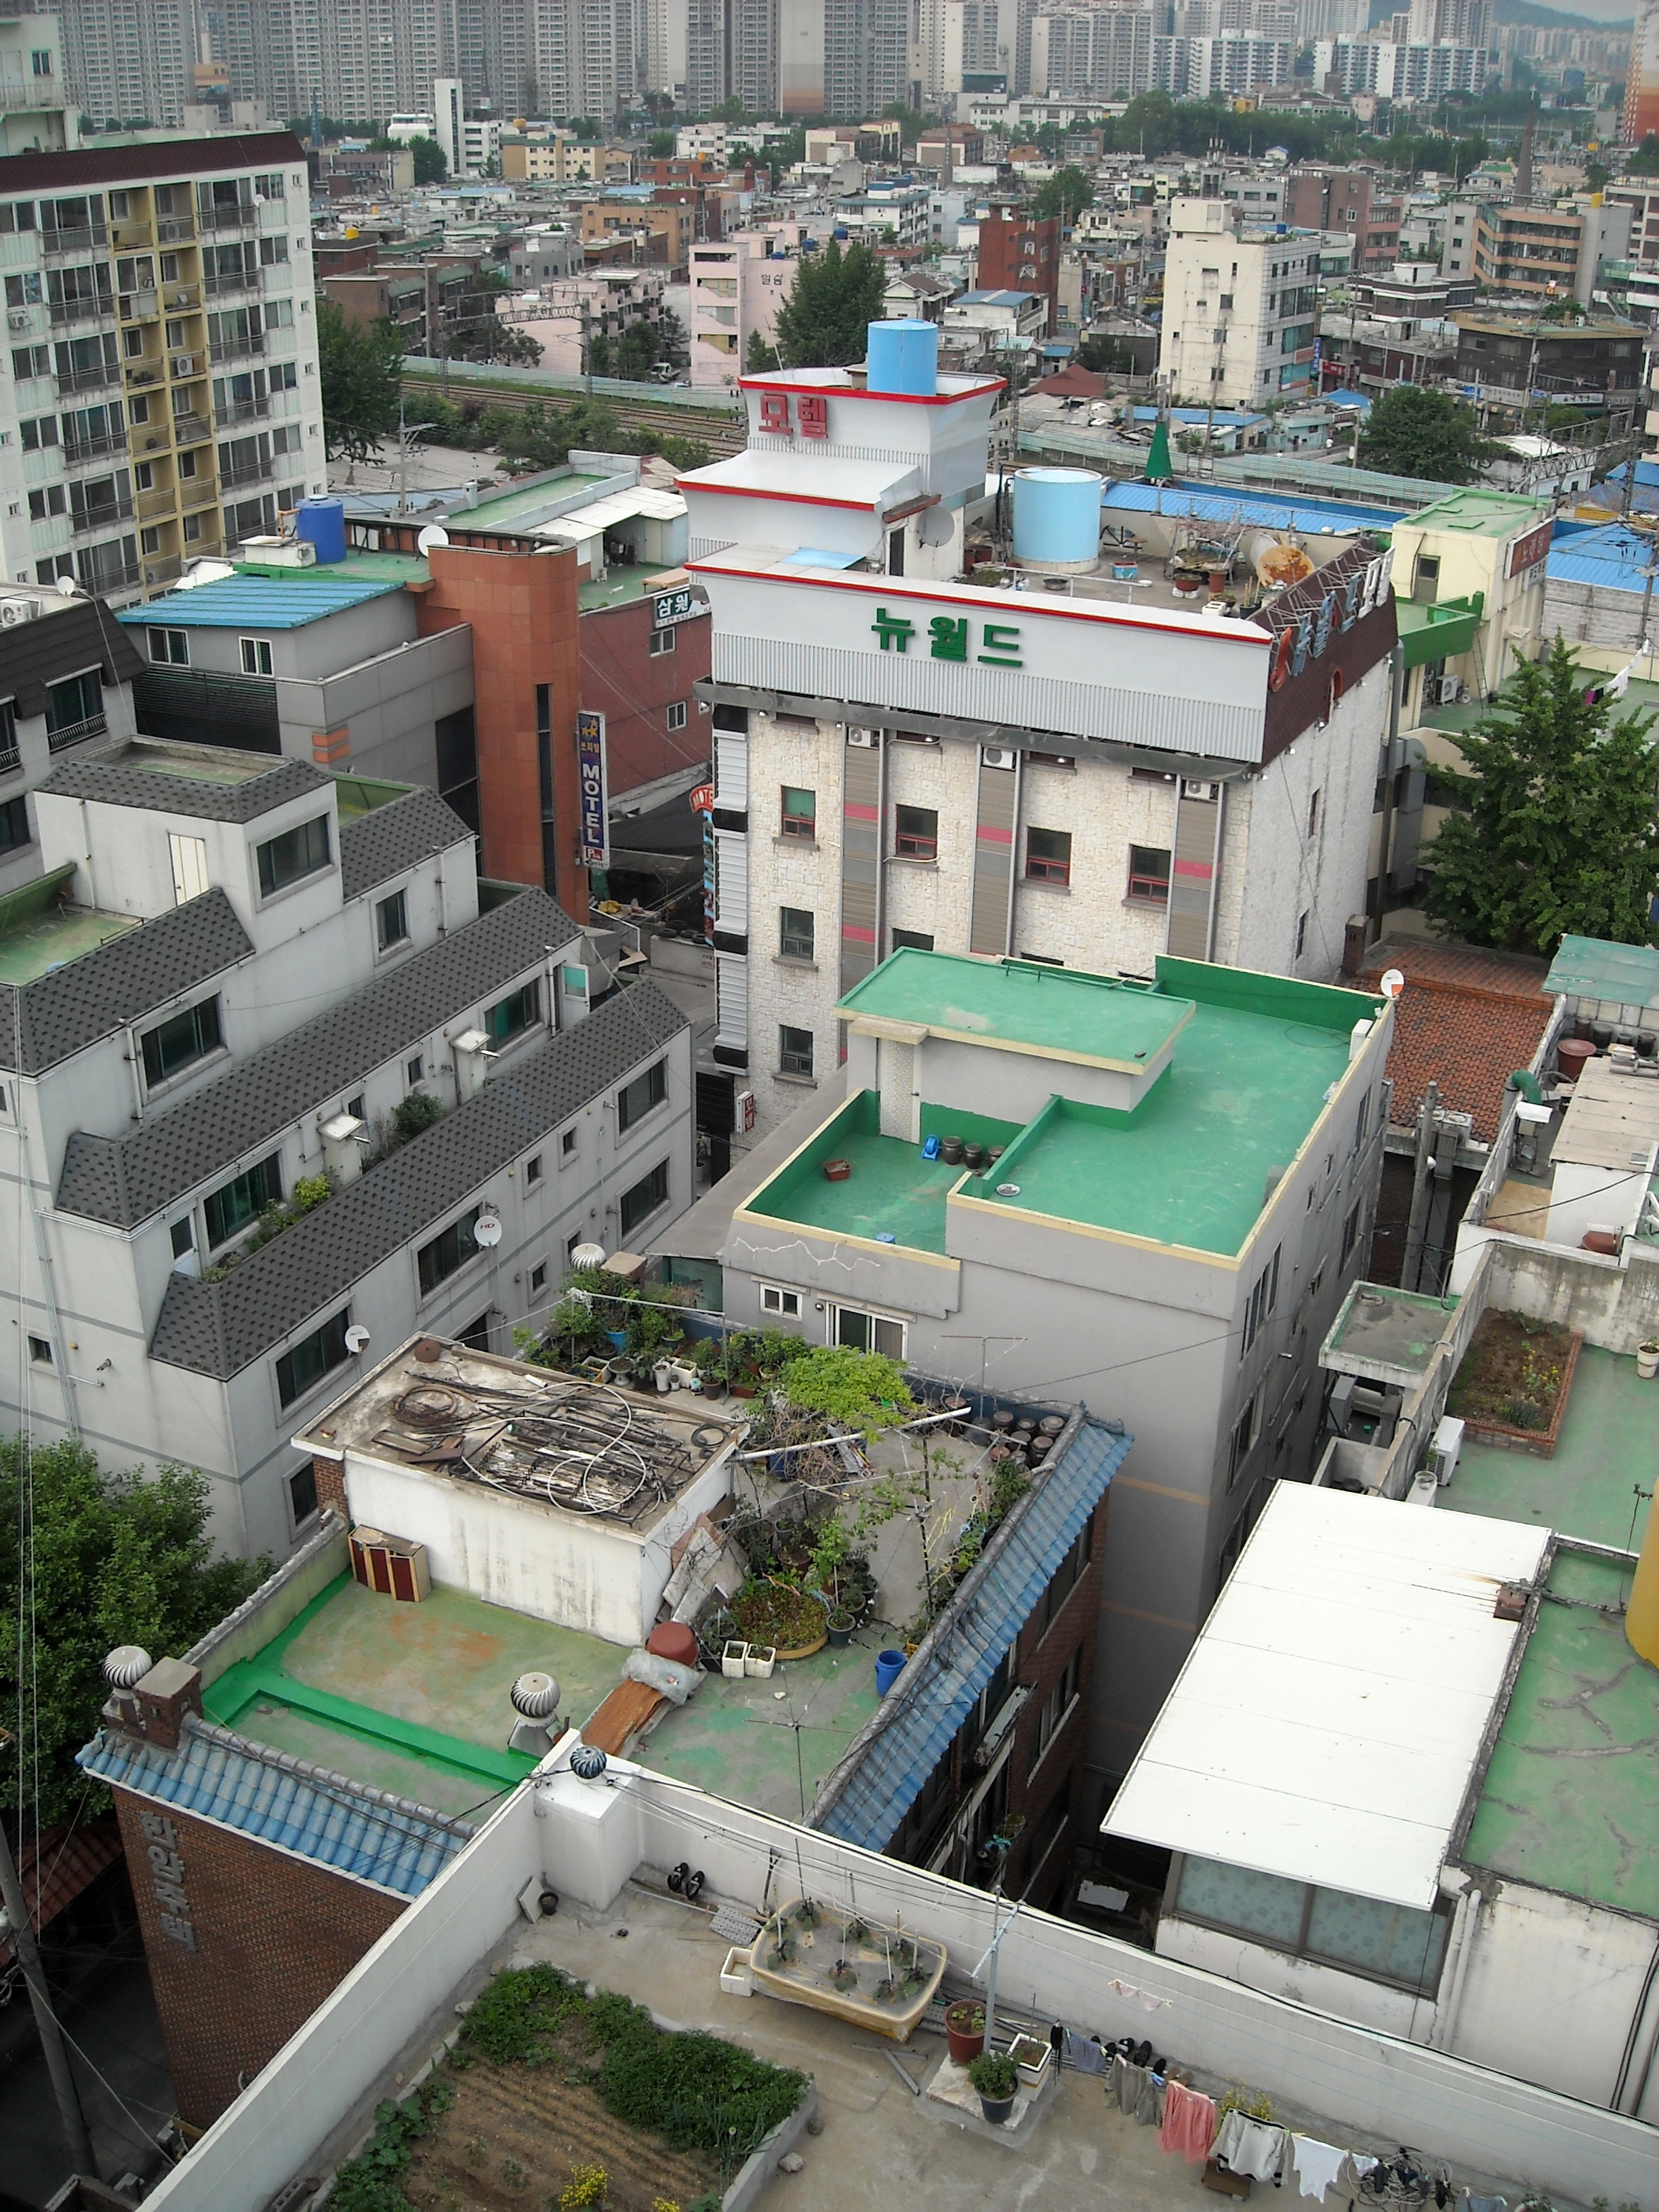 Korea: Rooftop lounging | Cupcakes Always Win